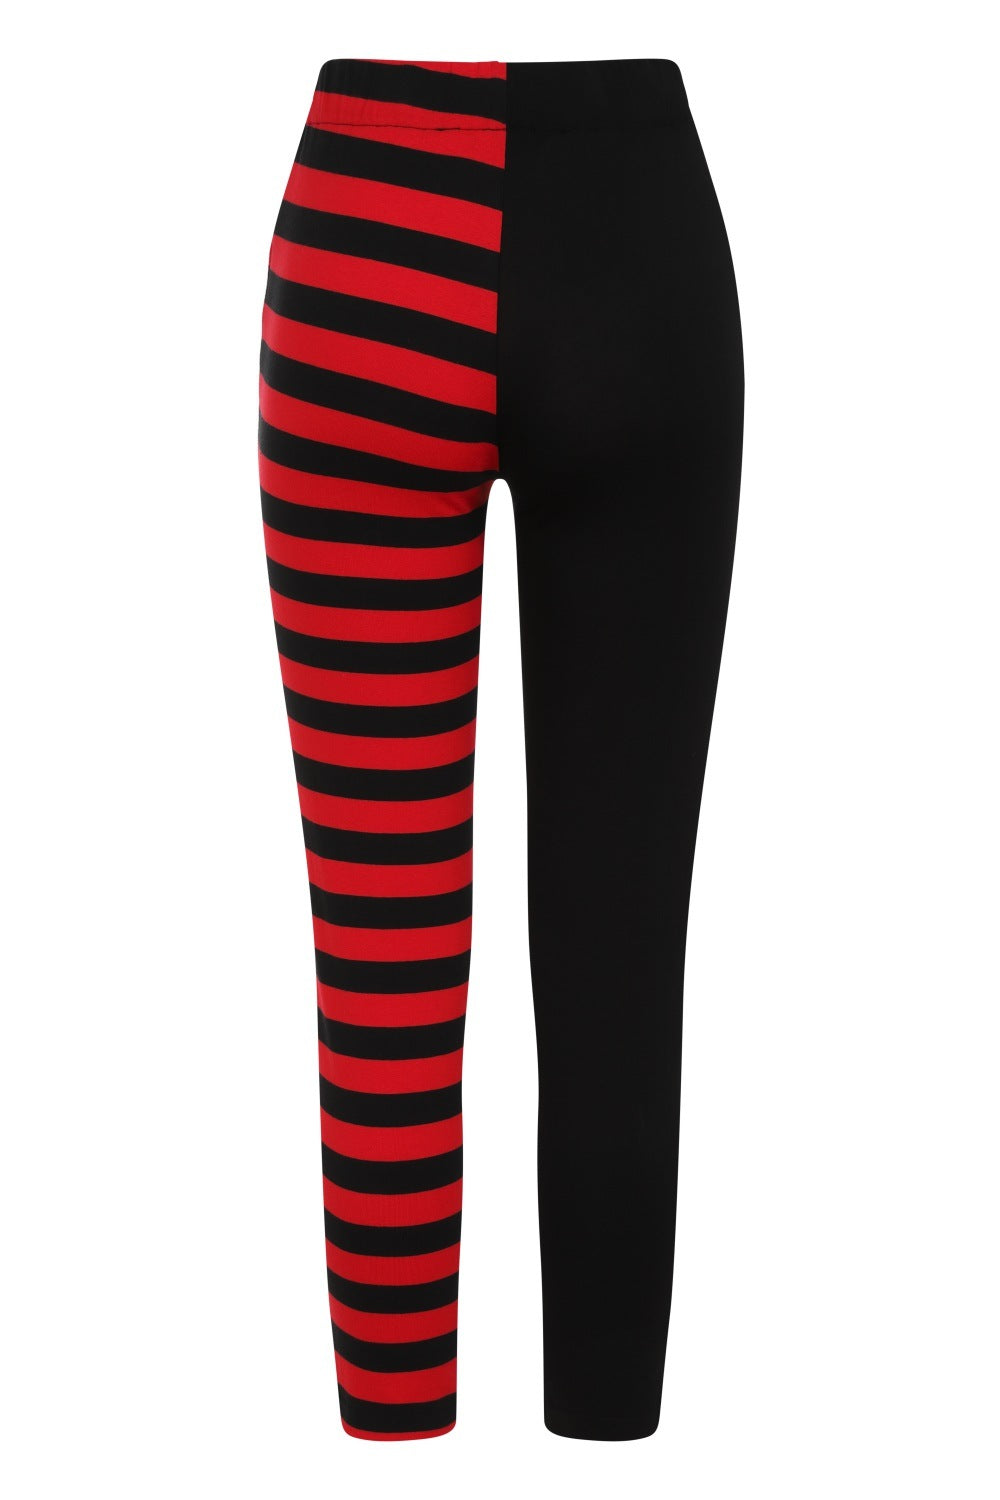 Banned Half Black Half Stripes Leggings - Red - Kate's Clothing